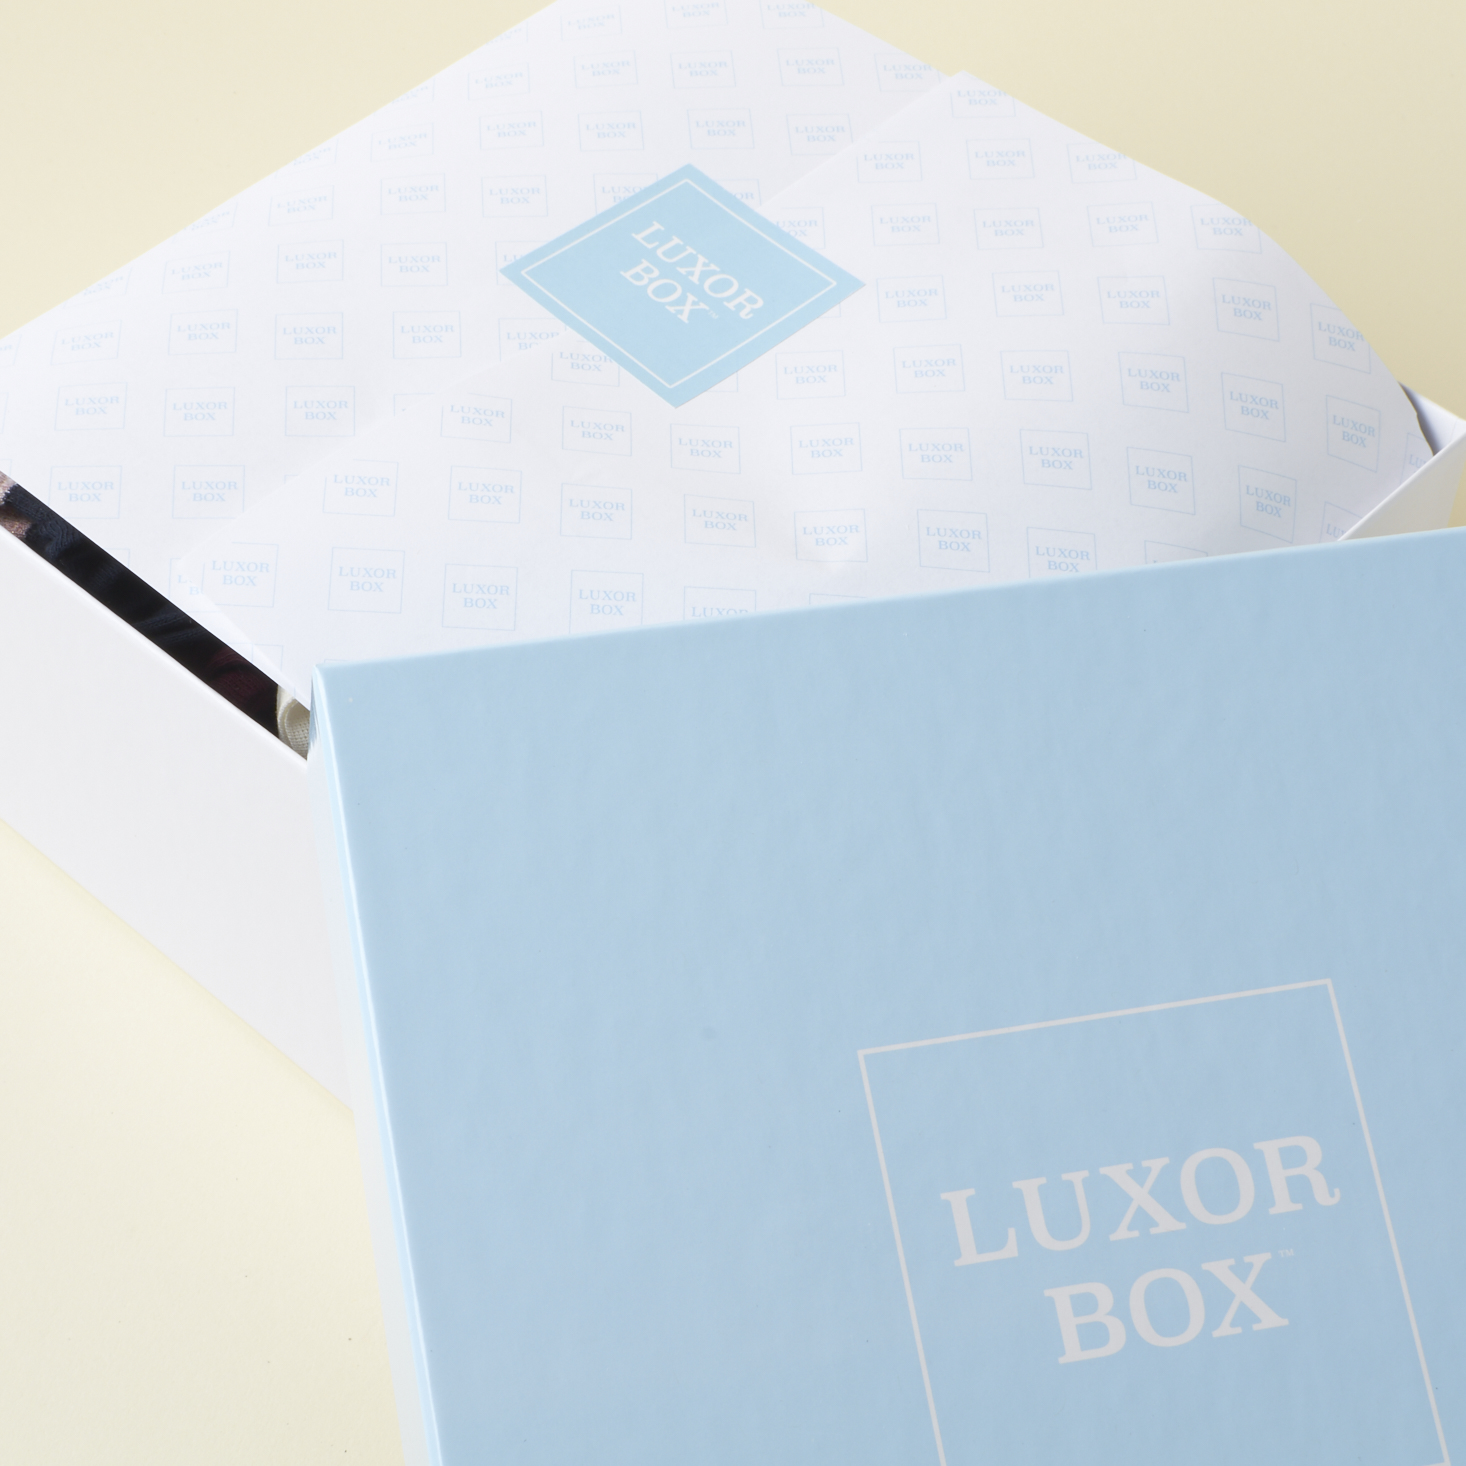 Luxor Box Subscription Box Review – November 2016